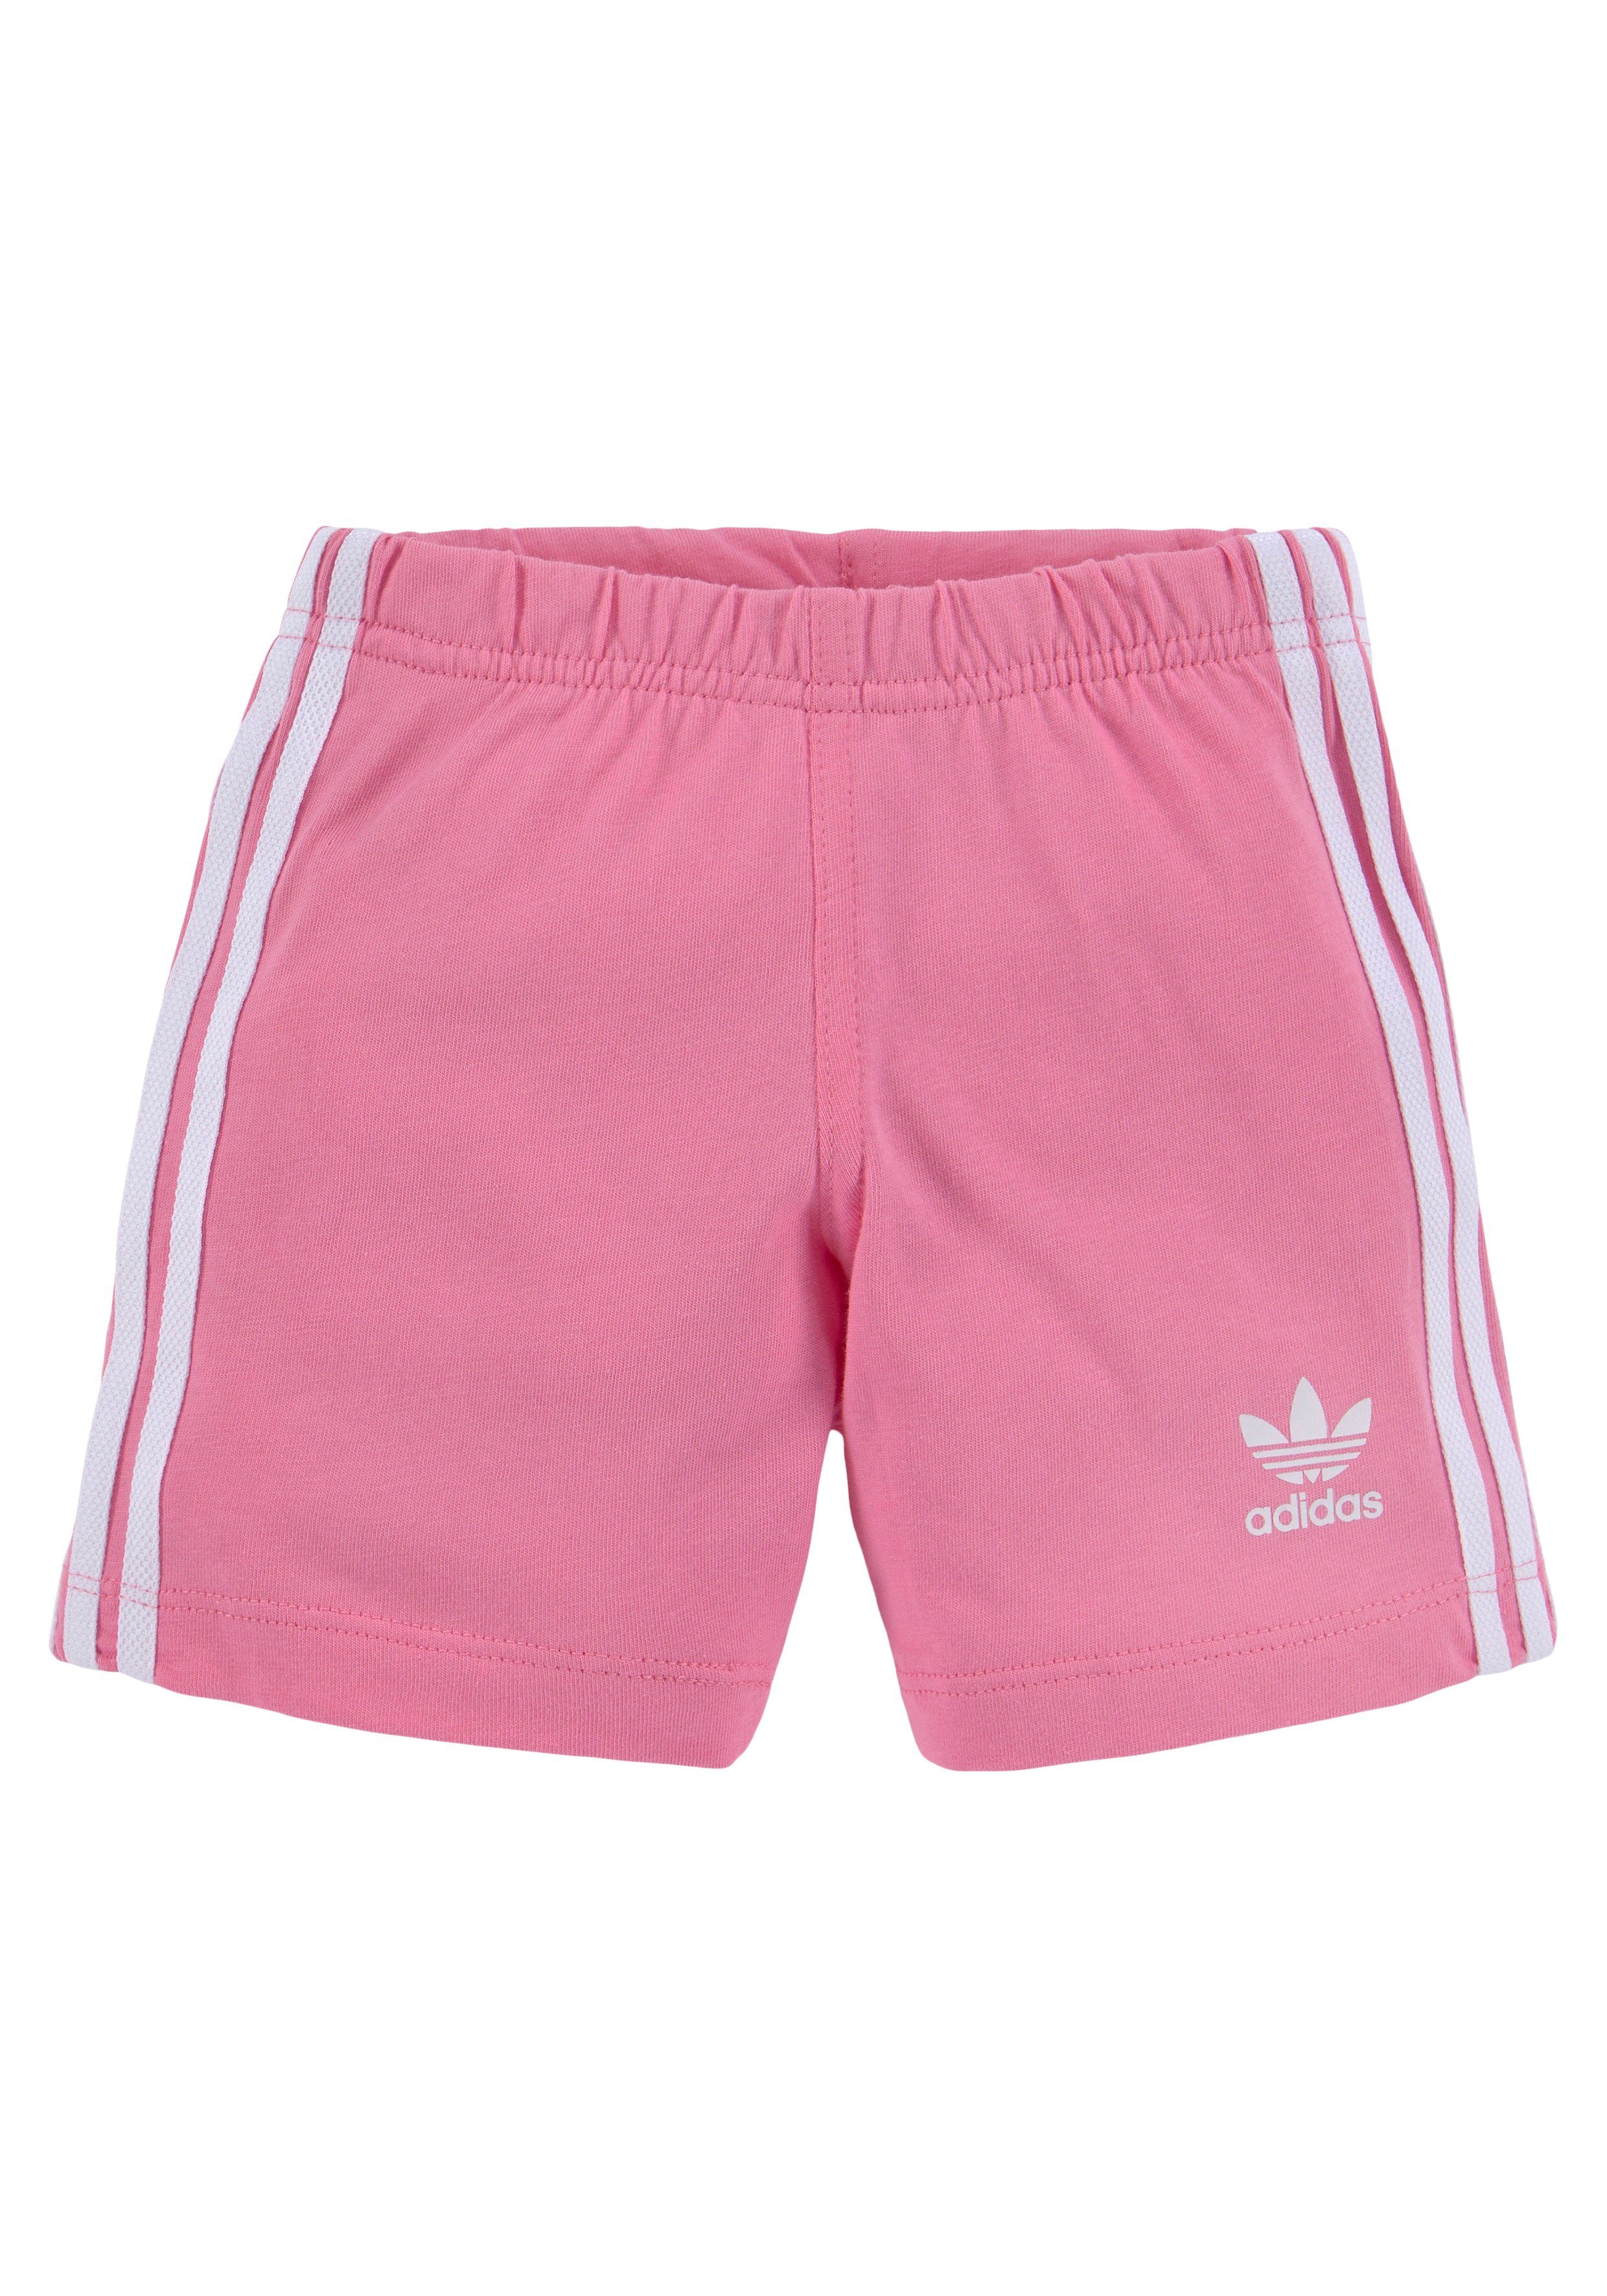 TREFOIL UND T-Shirt (Set) Shorts Bliss adidas White / SET SHORTS Originals & Pink